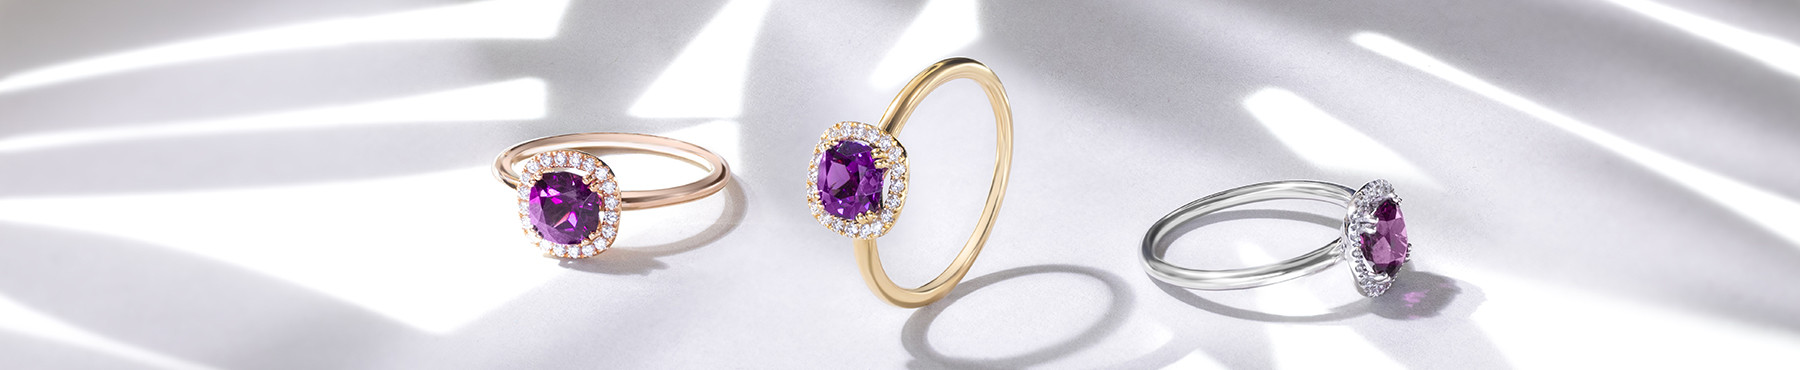 The Royal Purple Garnets Lepage jewelry